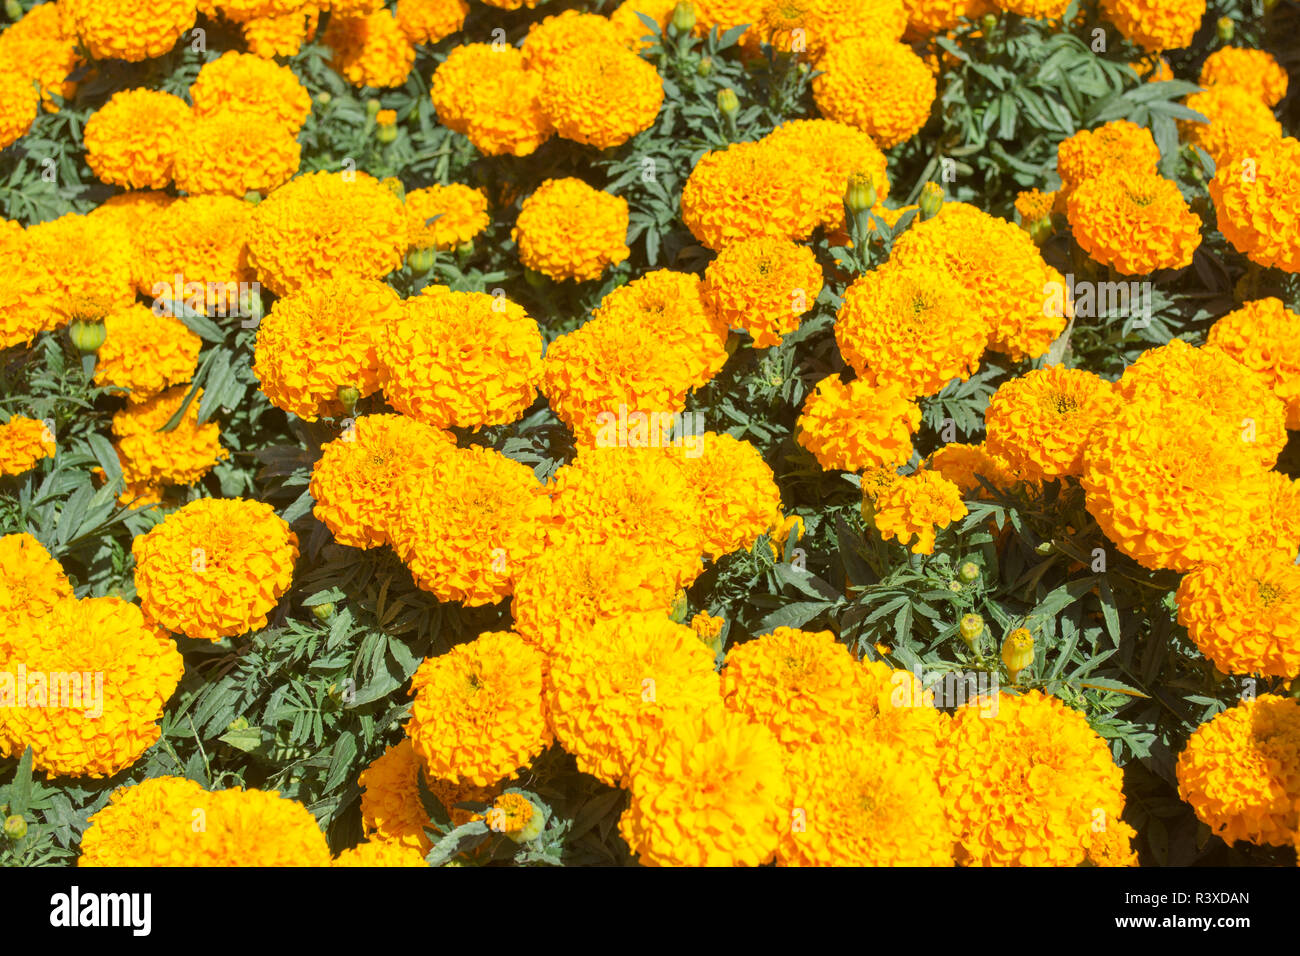 Orange Marigold - Cempasuchil Flower Stock Photo - Alamy